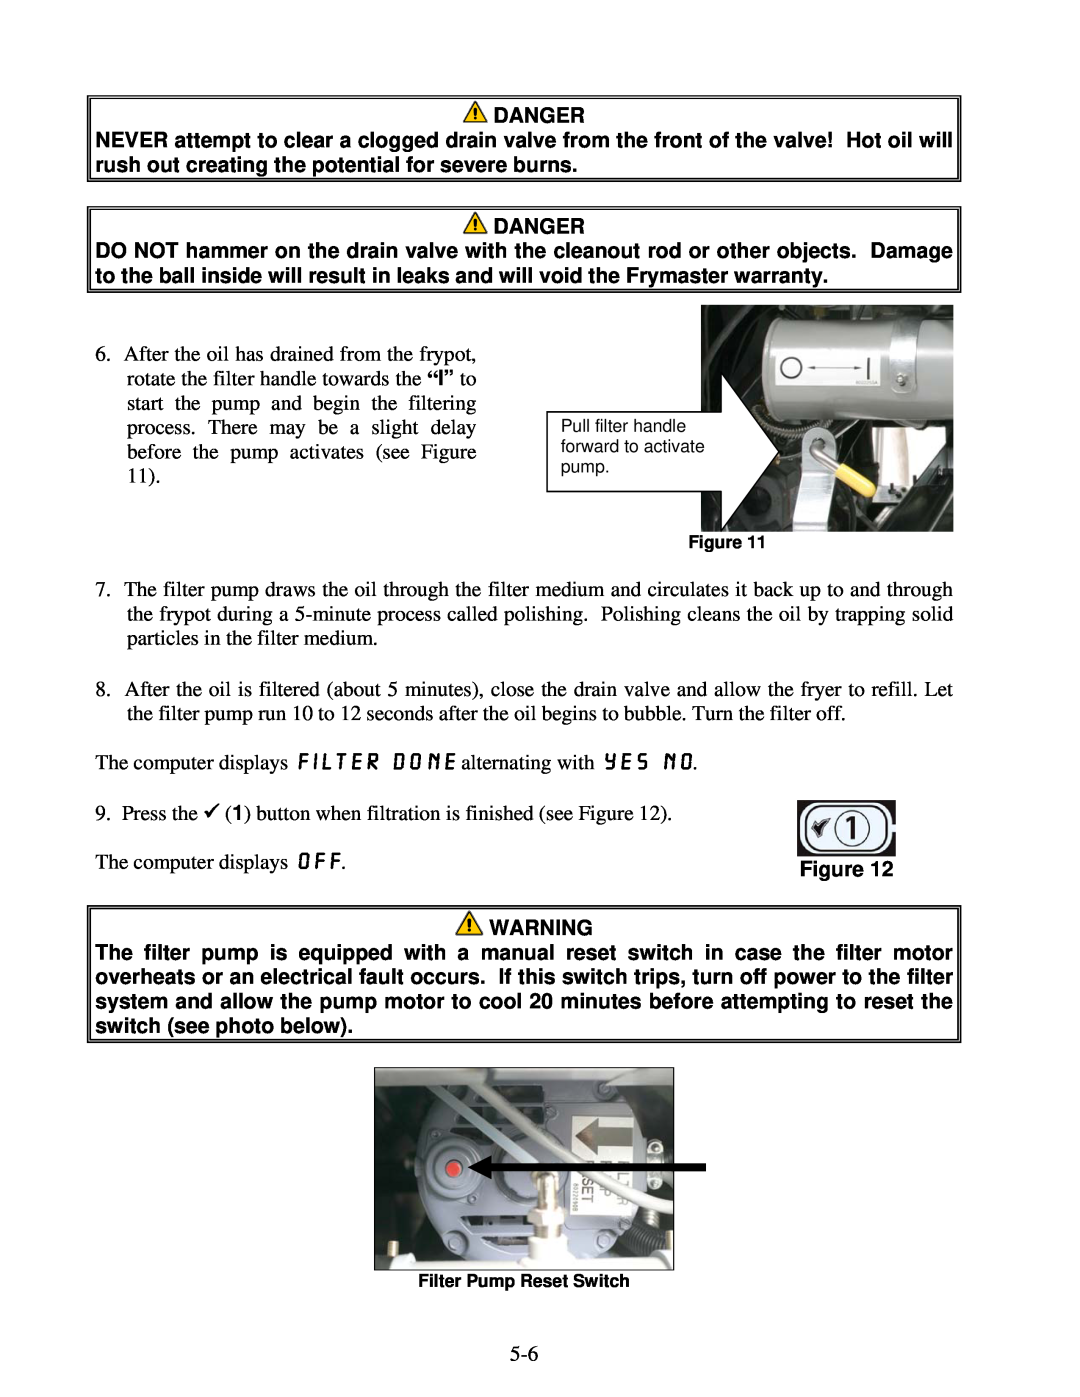 Frymaster Protector Series operation manual Danger 